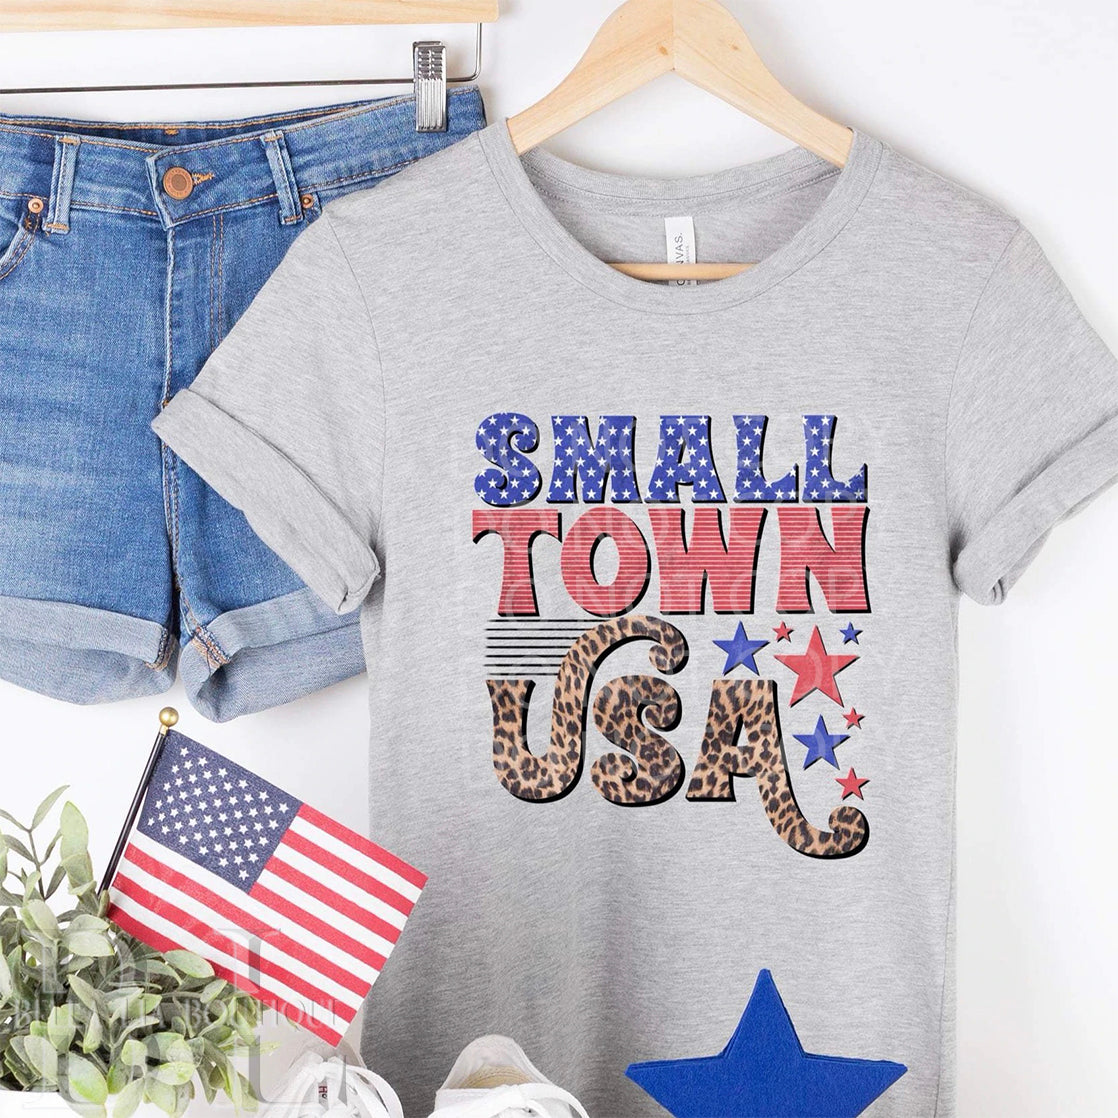 Small Town USA Graphic Tee or Sweatshirt - Bella Lia Boutique